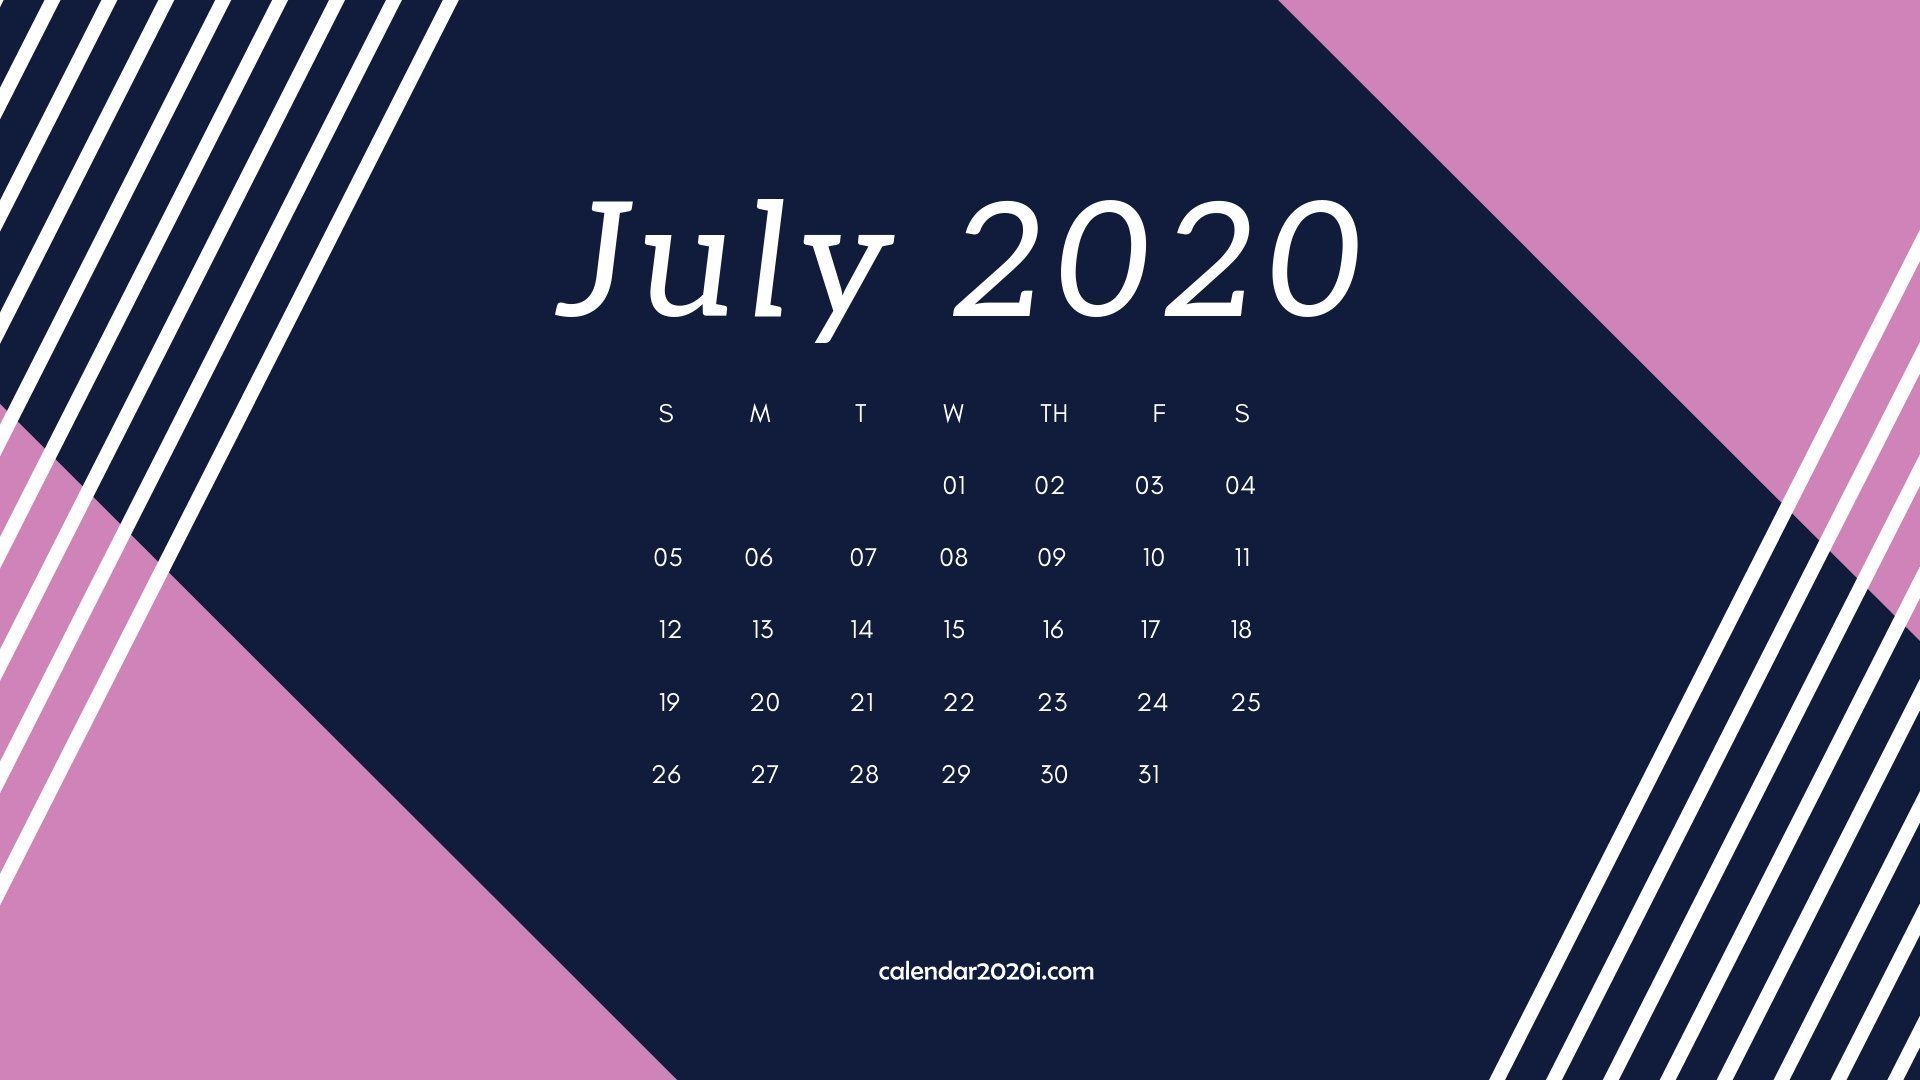 July 2020 Calendar Wallpaper Free July 2020 Calendar